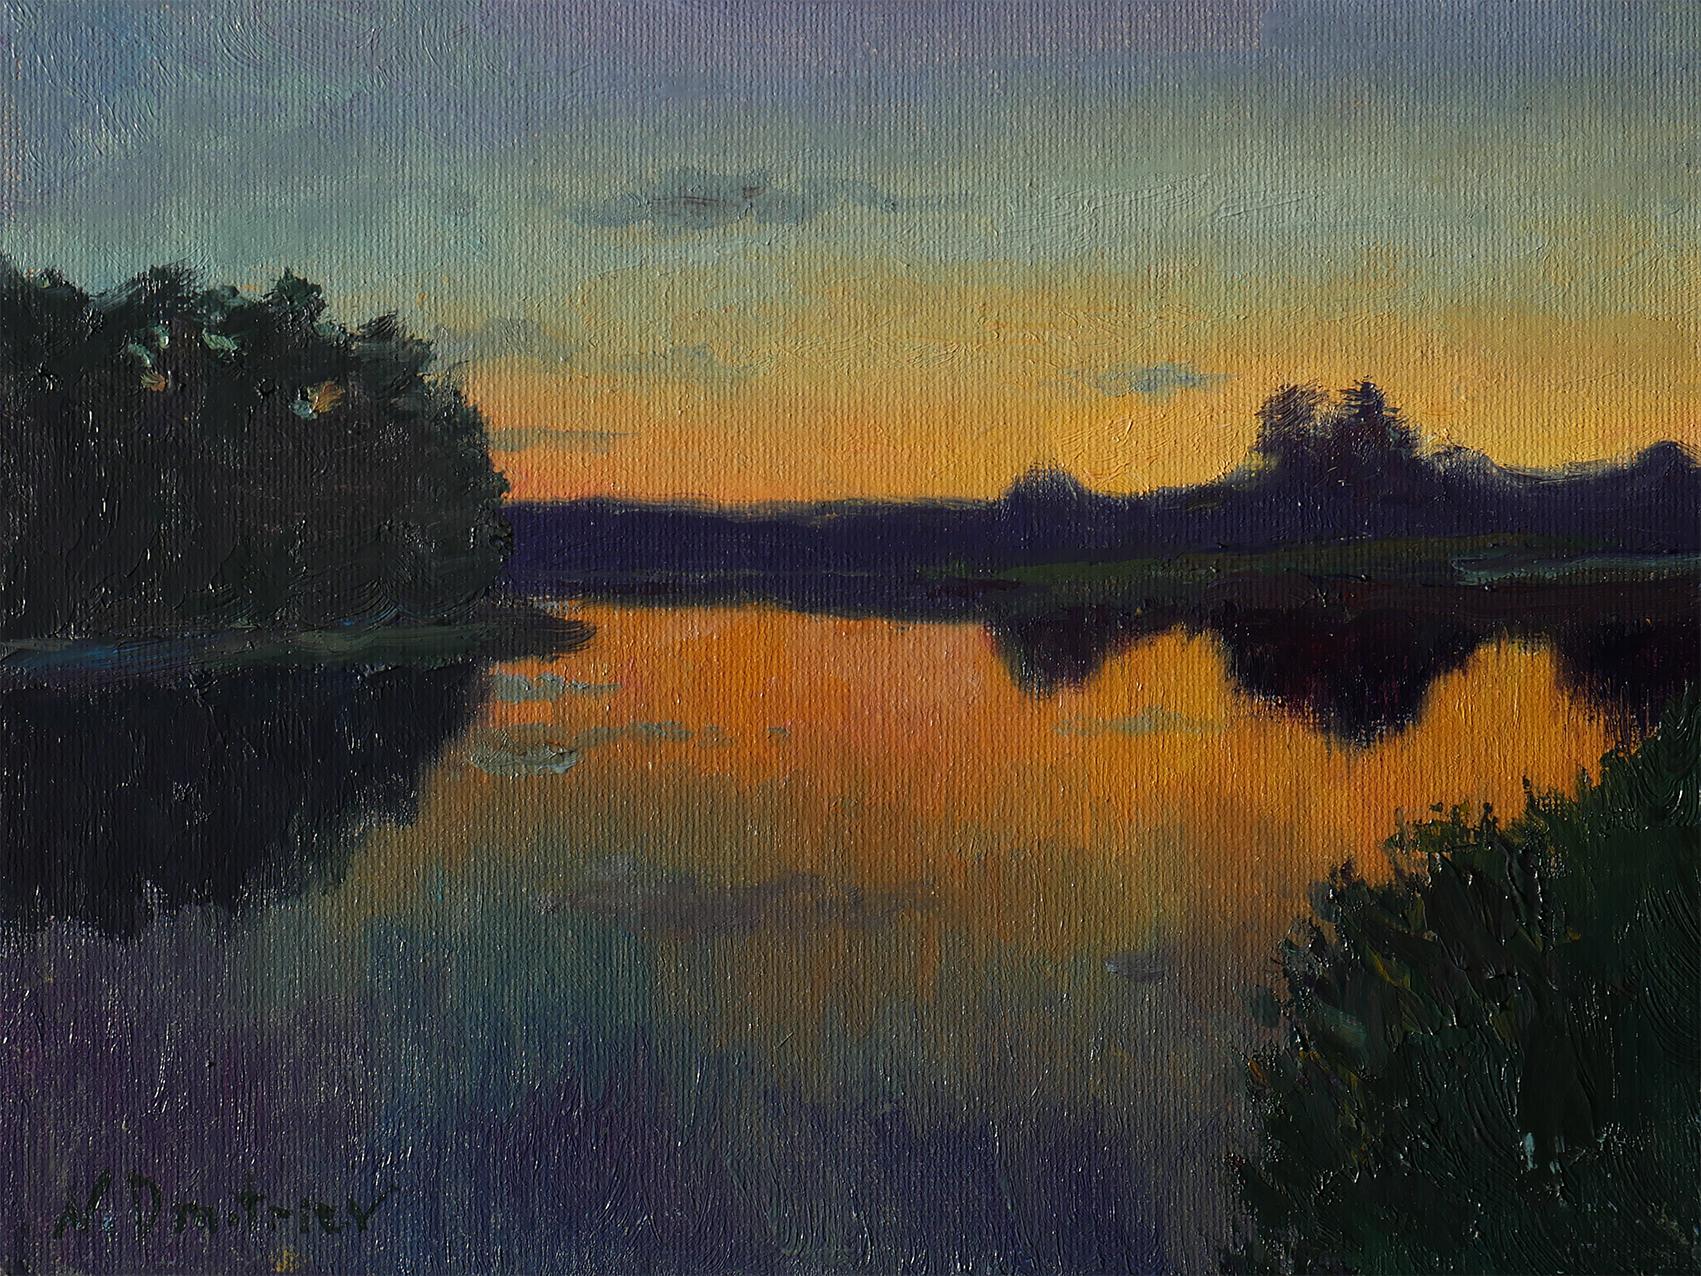 Nikolay Dmitriev Landscape Painting - Sunset Over the Pond - original sunny landscape, painting